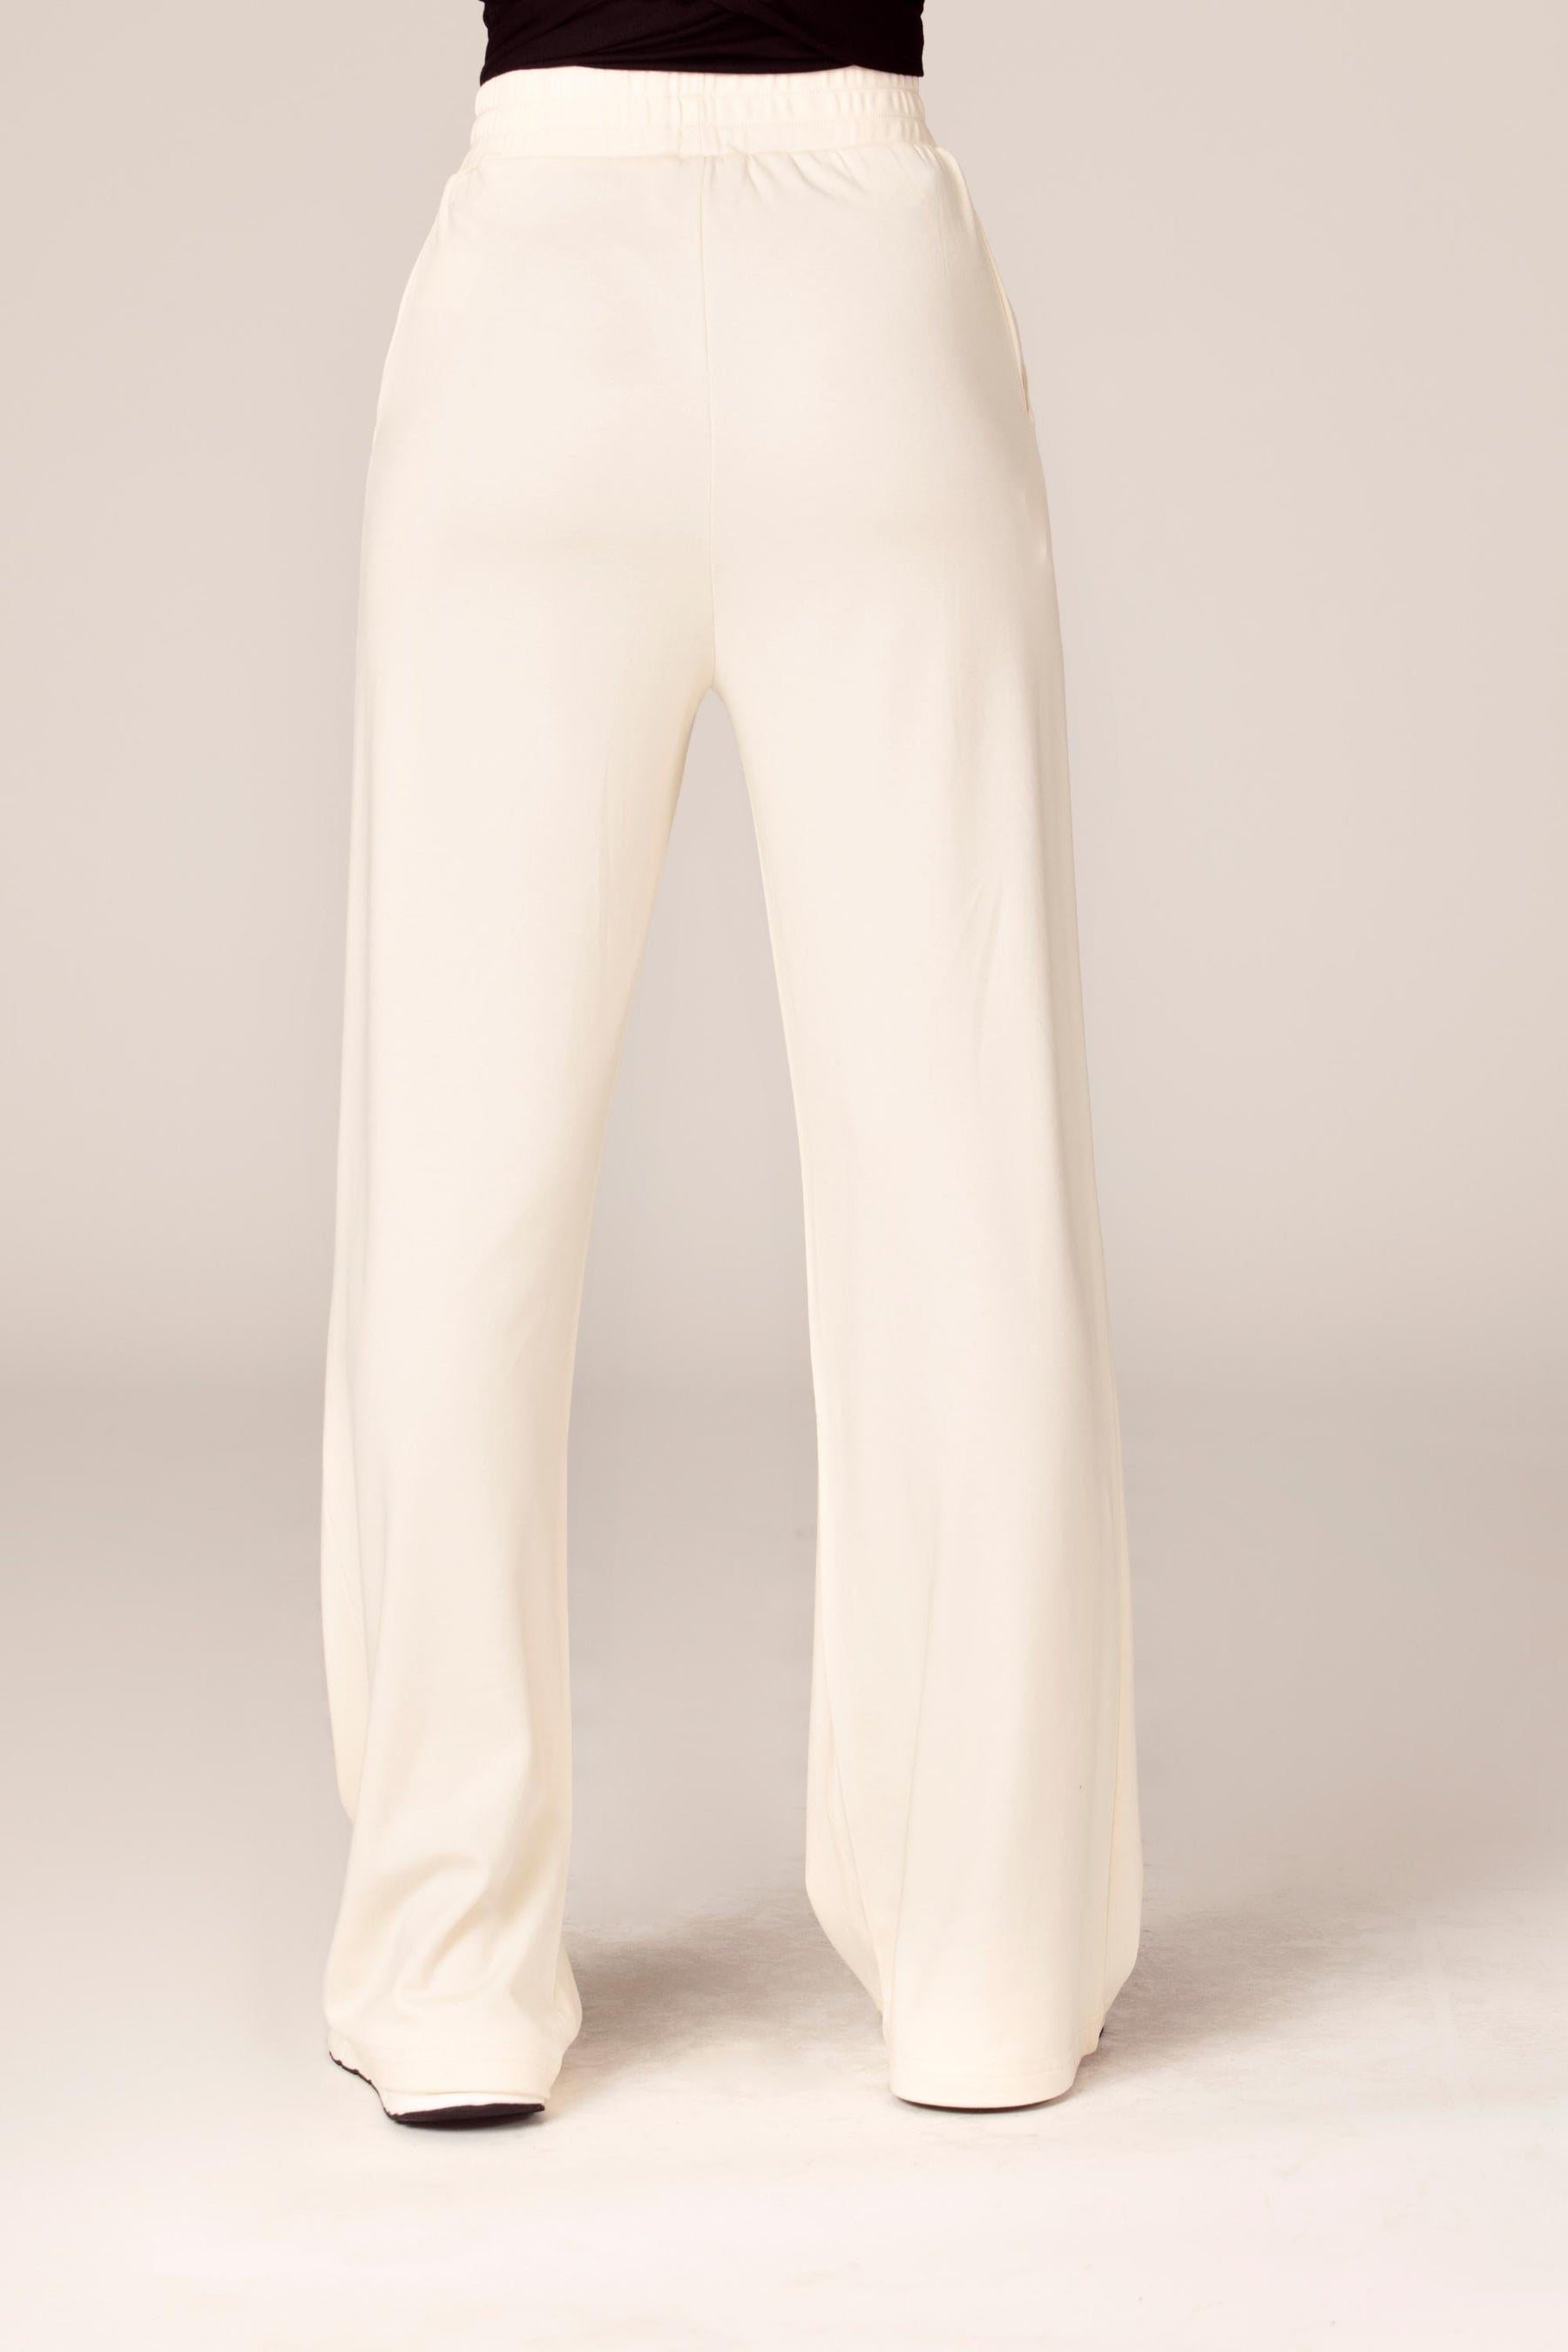 White Sand High Waist Lounge Pants Veiled Collection 